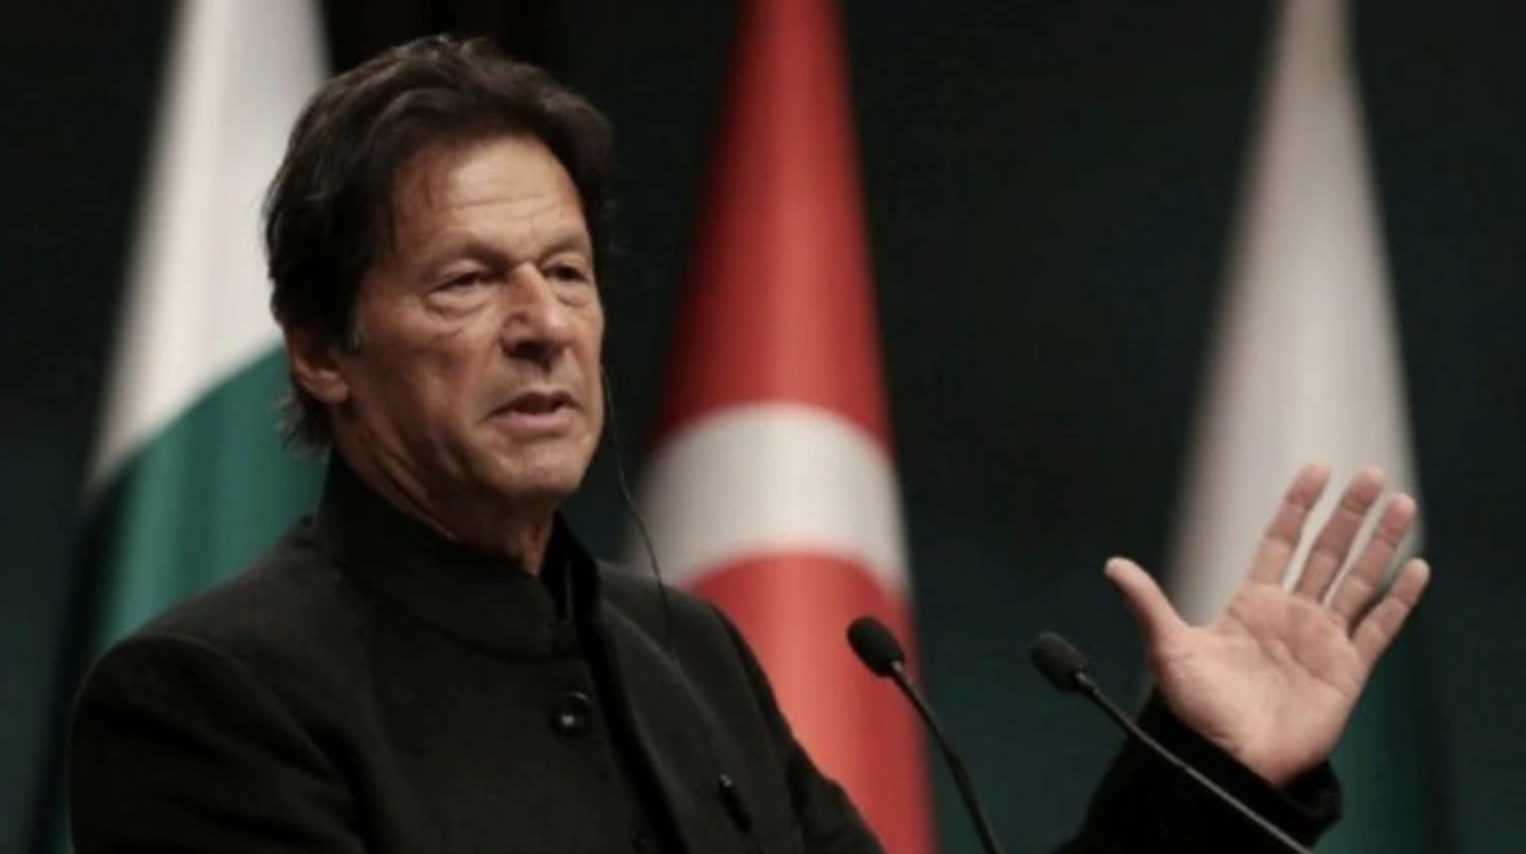 Imran Khan's Hypocrisy: Attacks India on Kashmir, Backs Turkish Offensive on Muslim Kurds in Syria